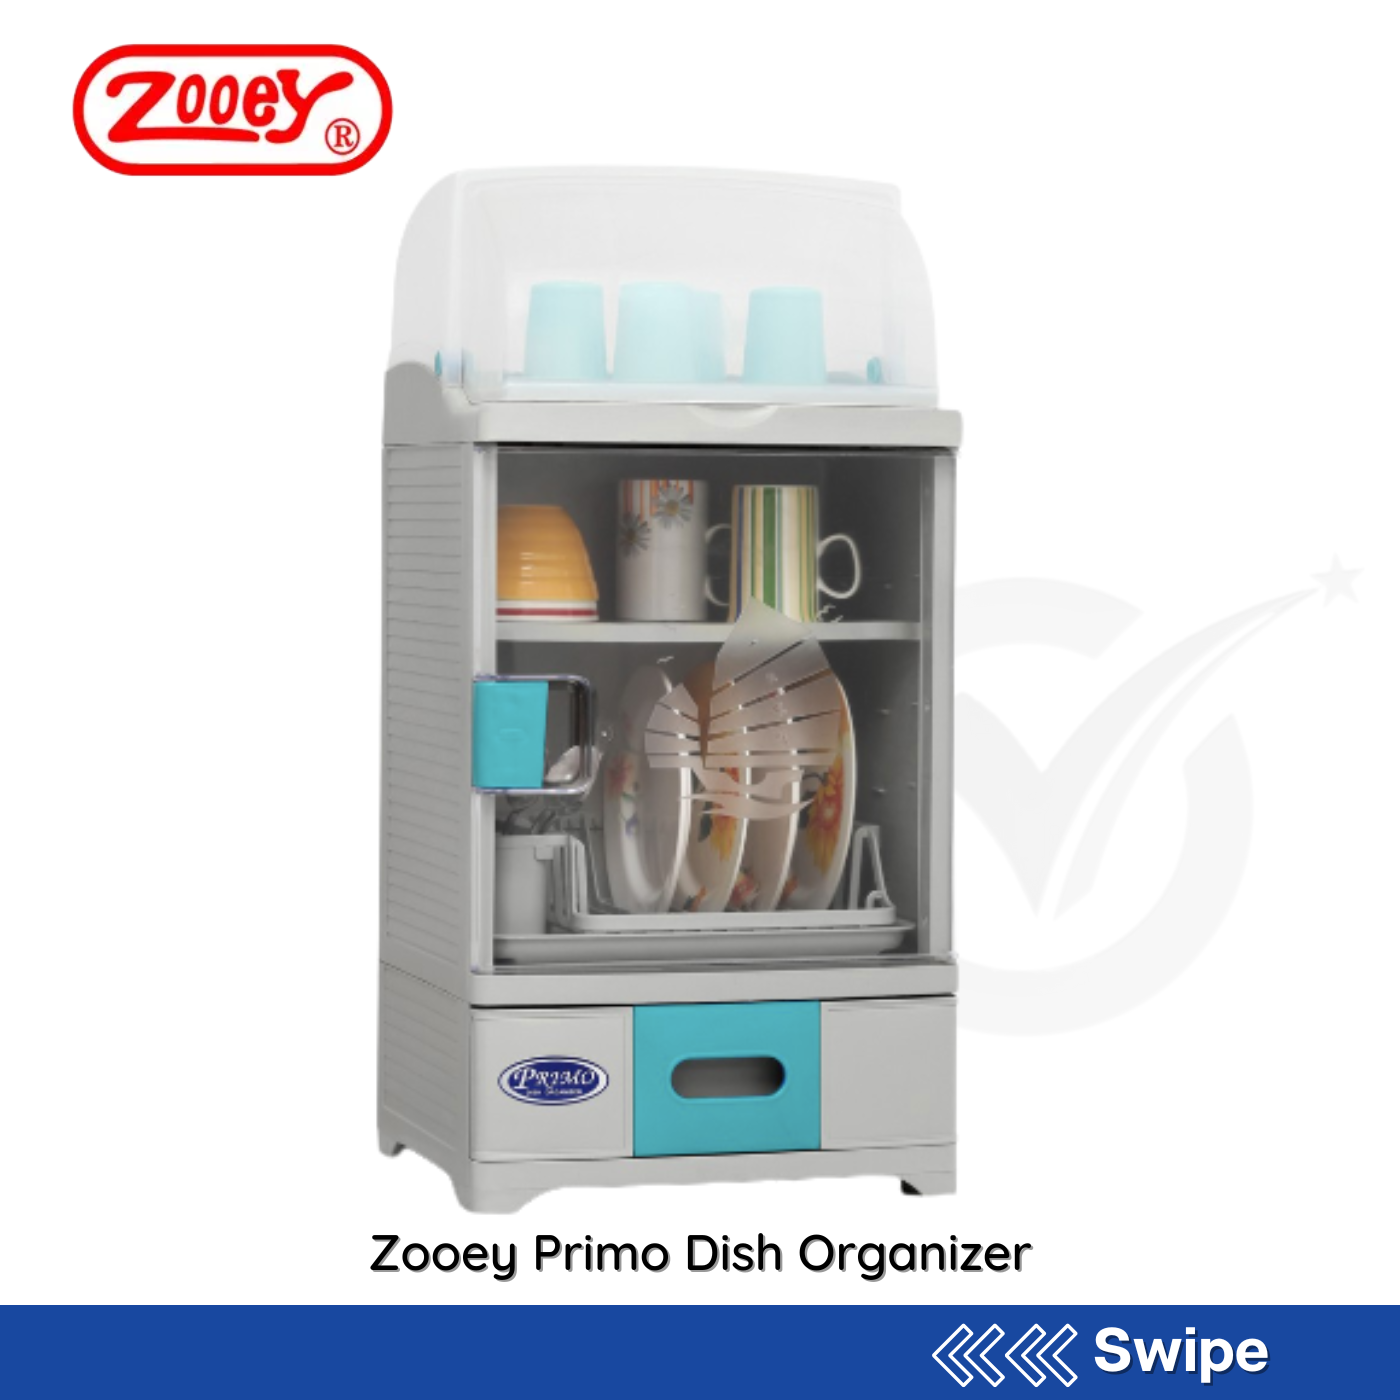 Zooey Primo Dish Organizer - People's Choice Marketing